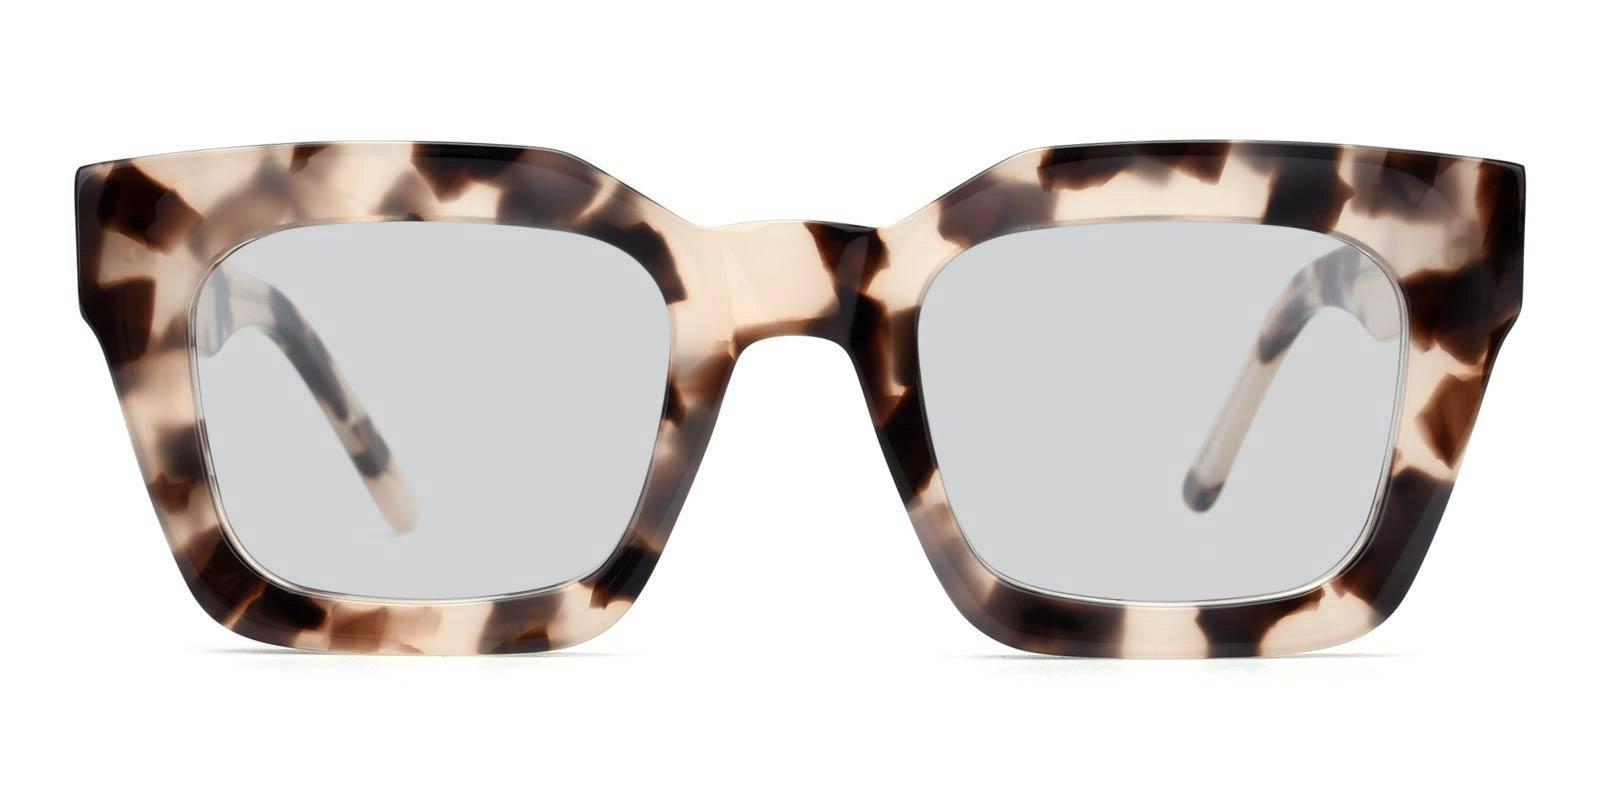 Plut Leopard Acetate Sunglasses , UniversalBridgeFit Frames from ABBE Glasses